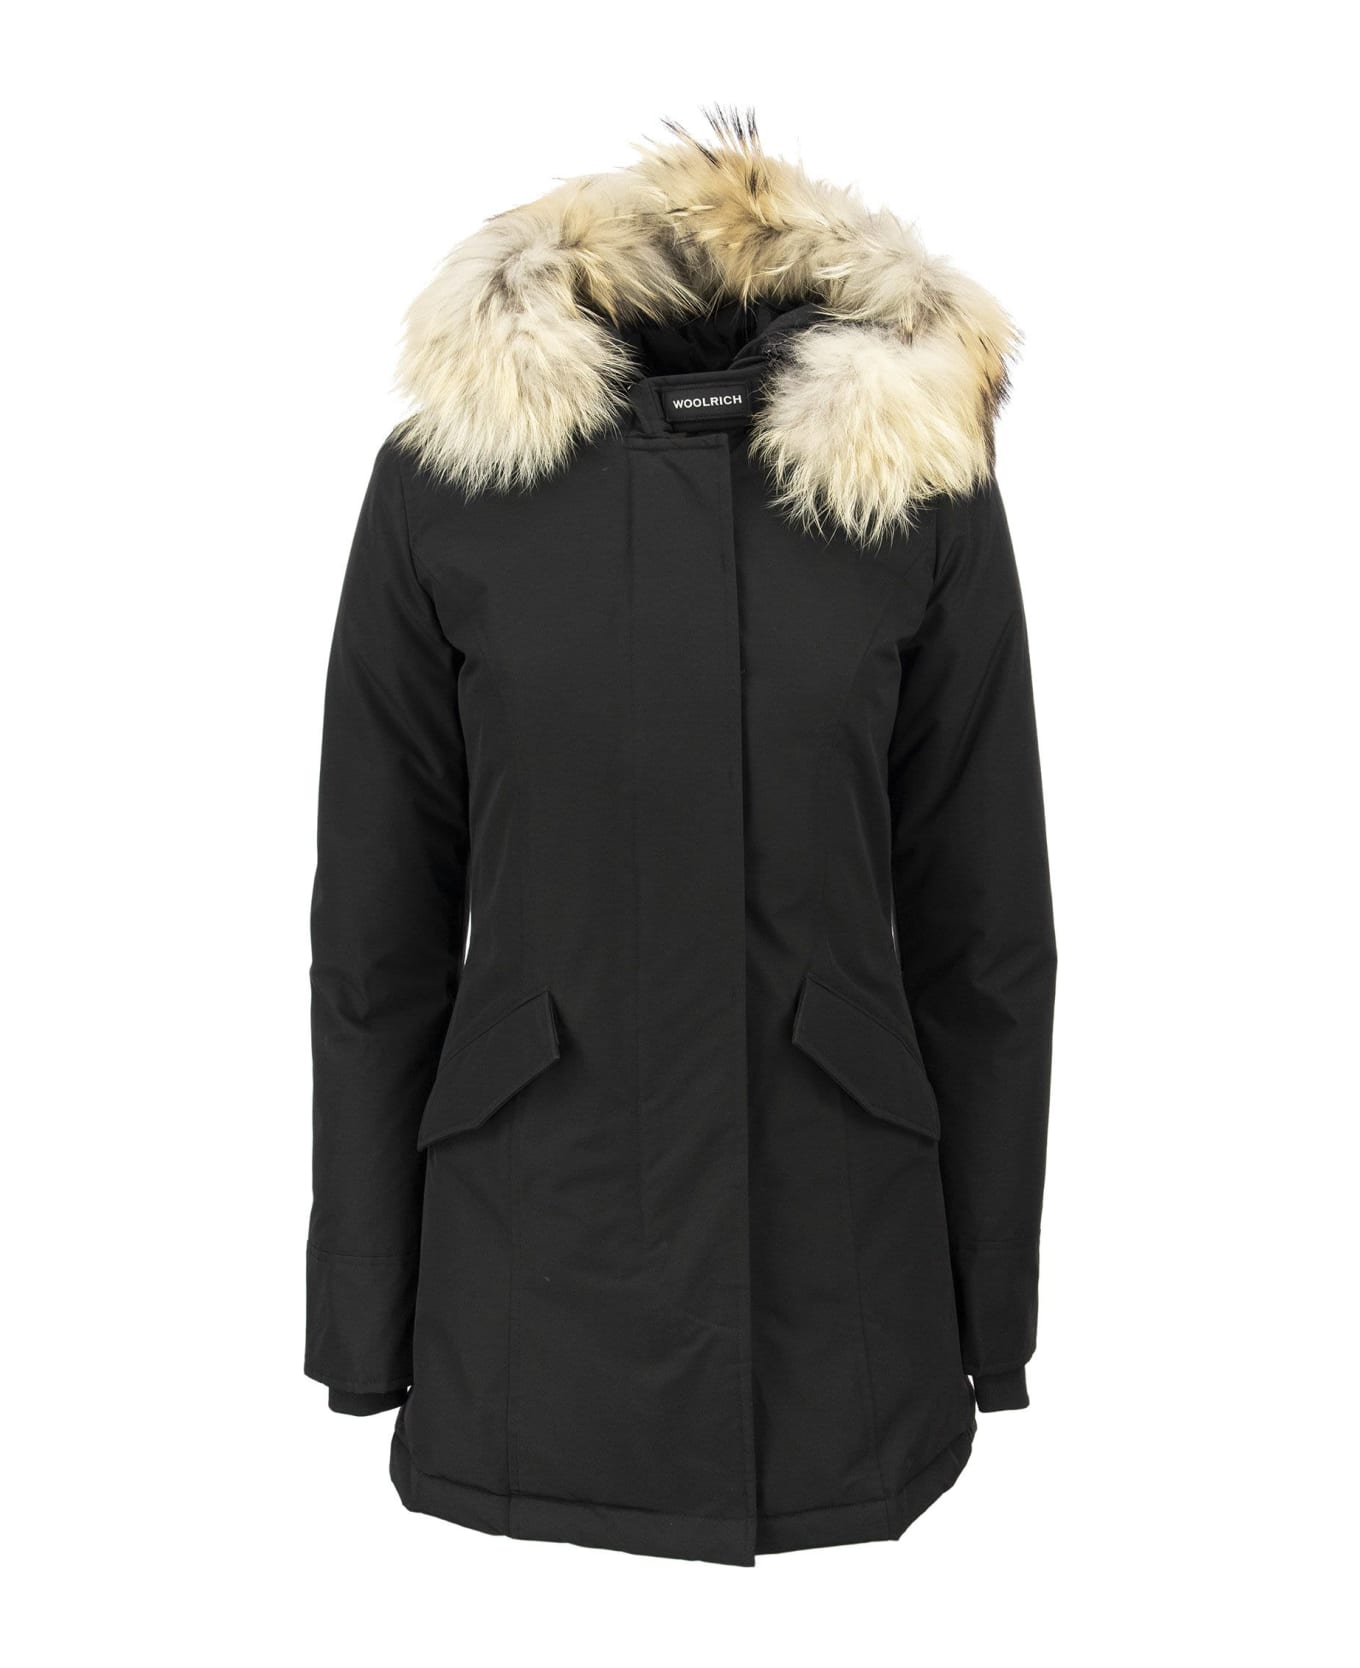 Woolrich Arctic Parka Fur Racoon - Blk Black コート